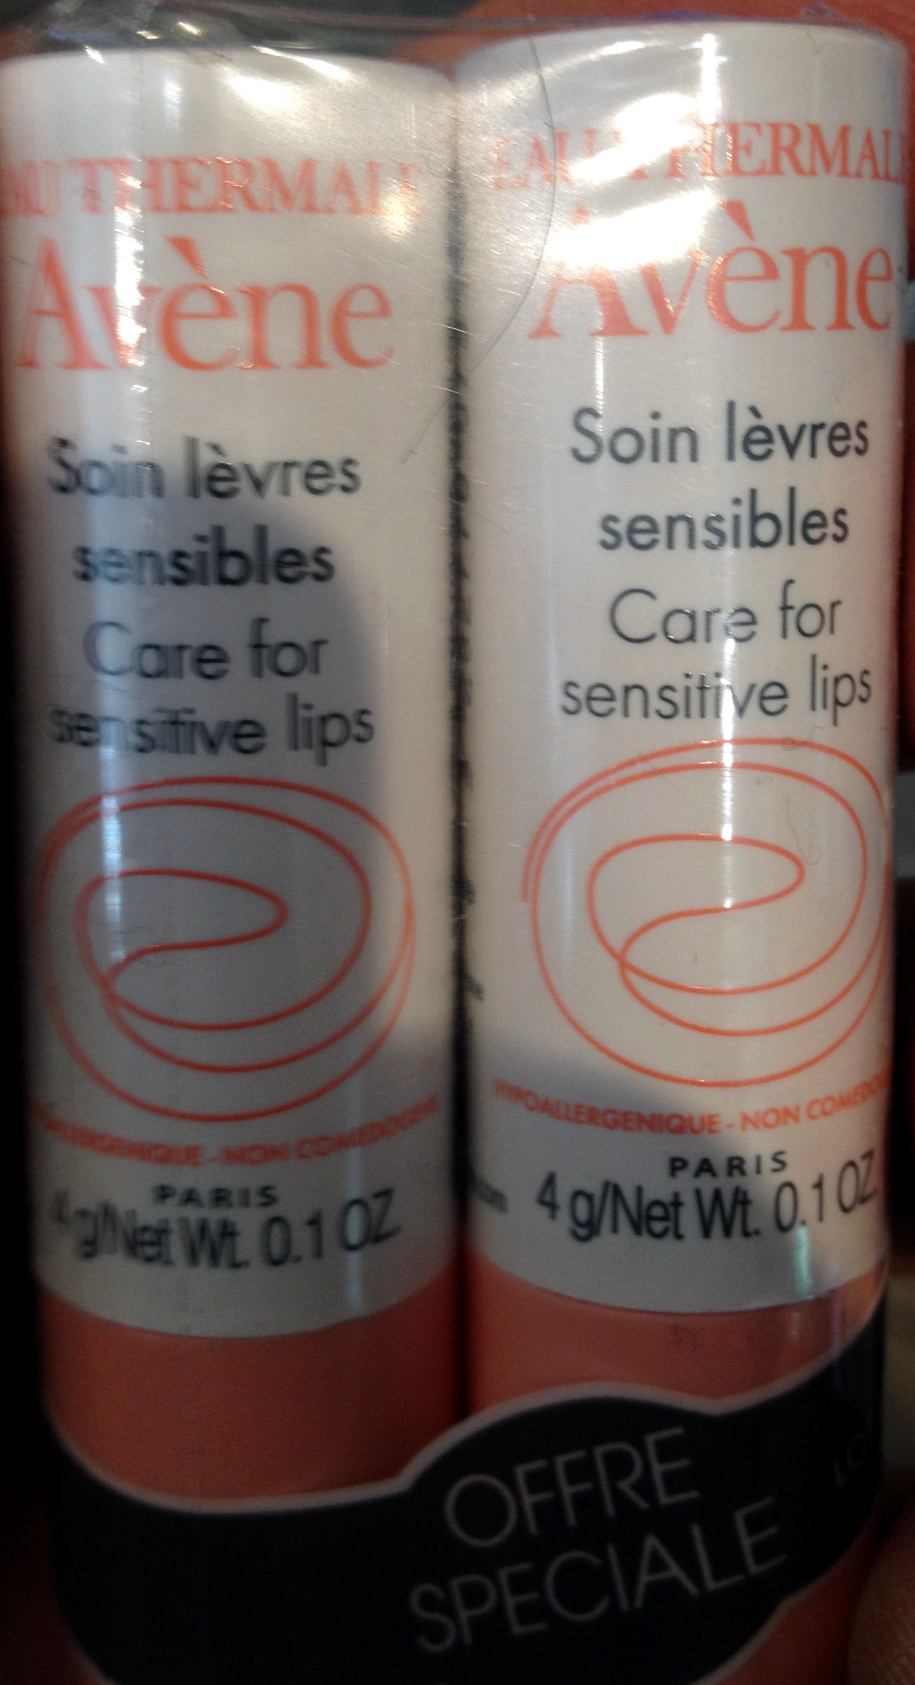 Soin lèvres sensibles - Product - fr